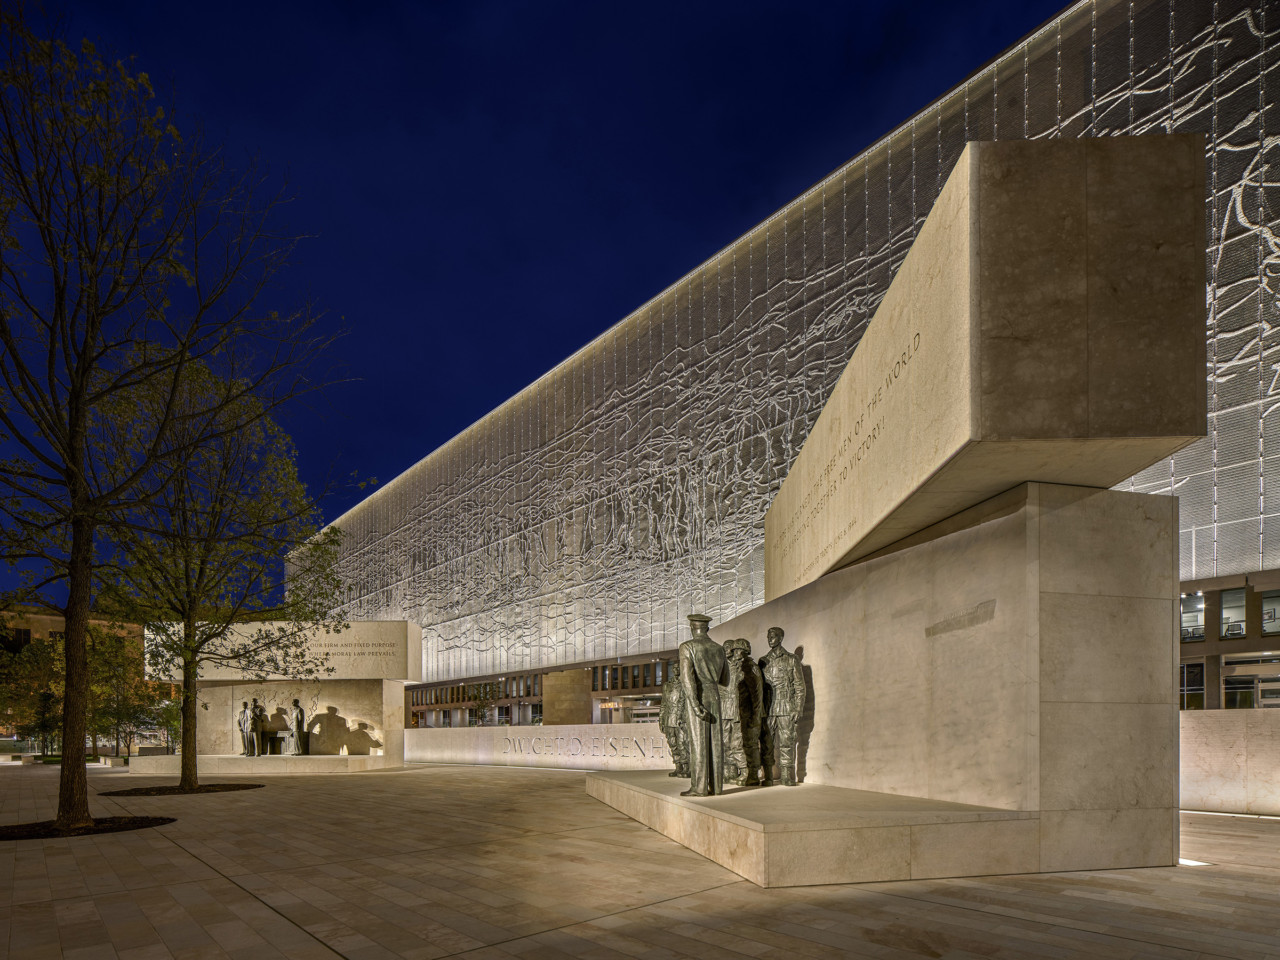 Nighttime image of the Eisenhower Memorial